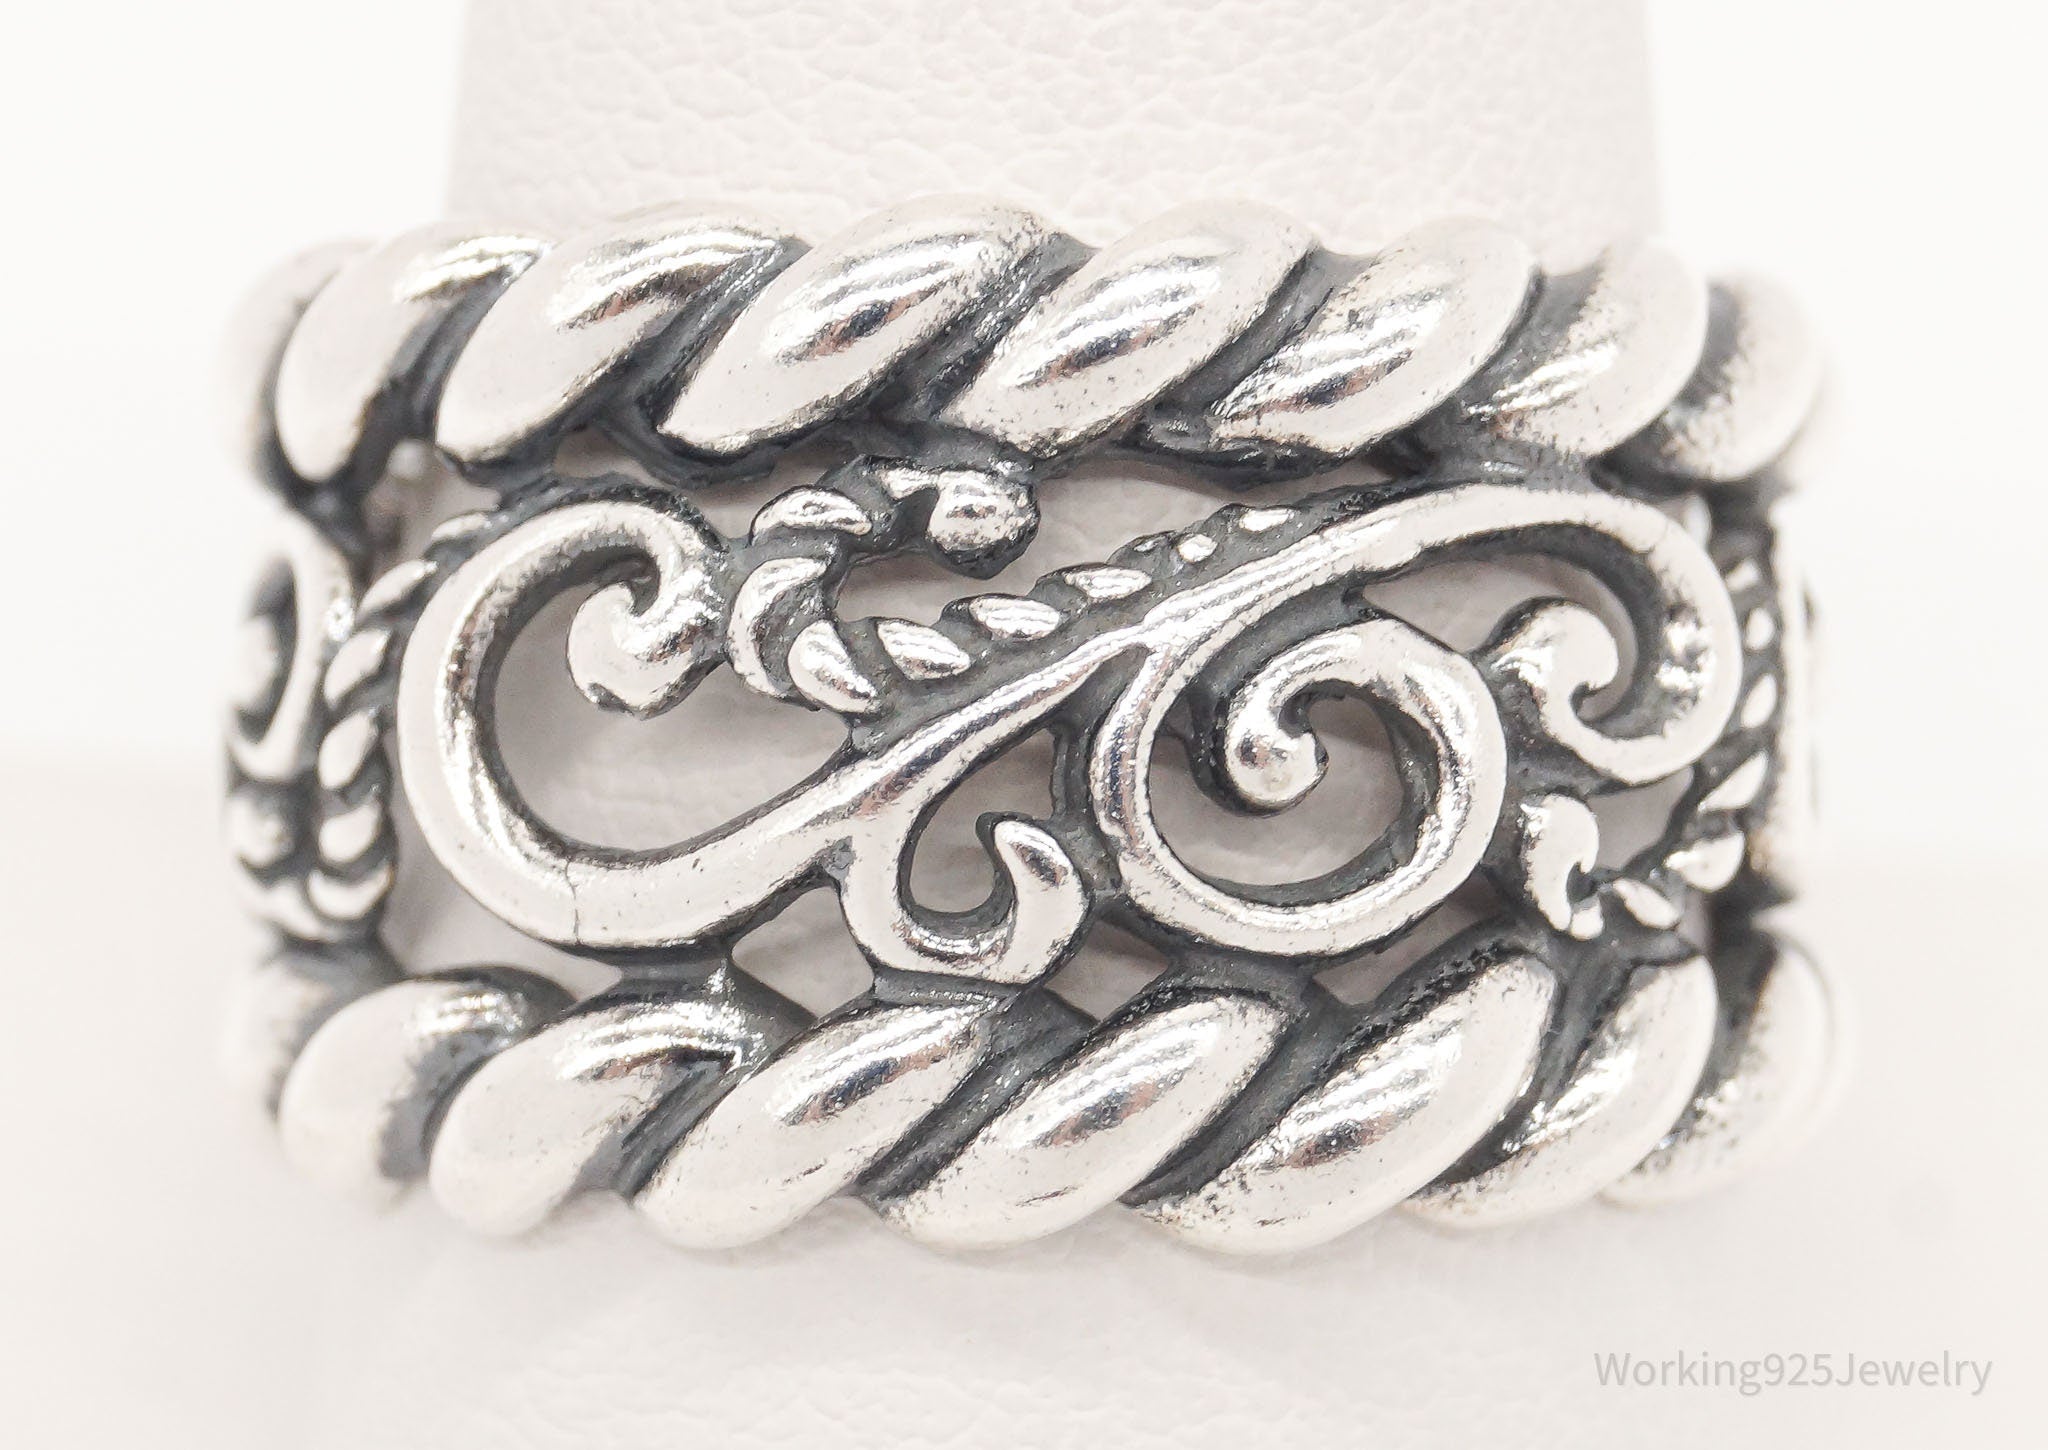 VTG Southwestern Designer Carolyn Pollack Relios Sterling Silver Ring - Size 10